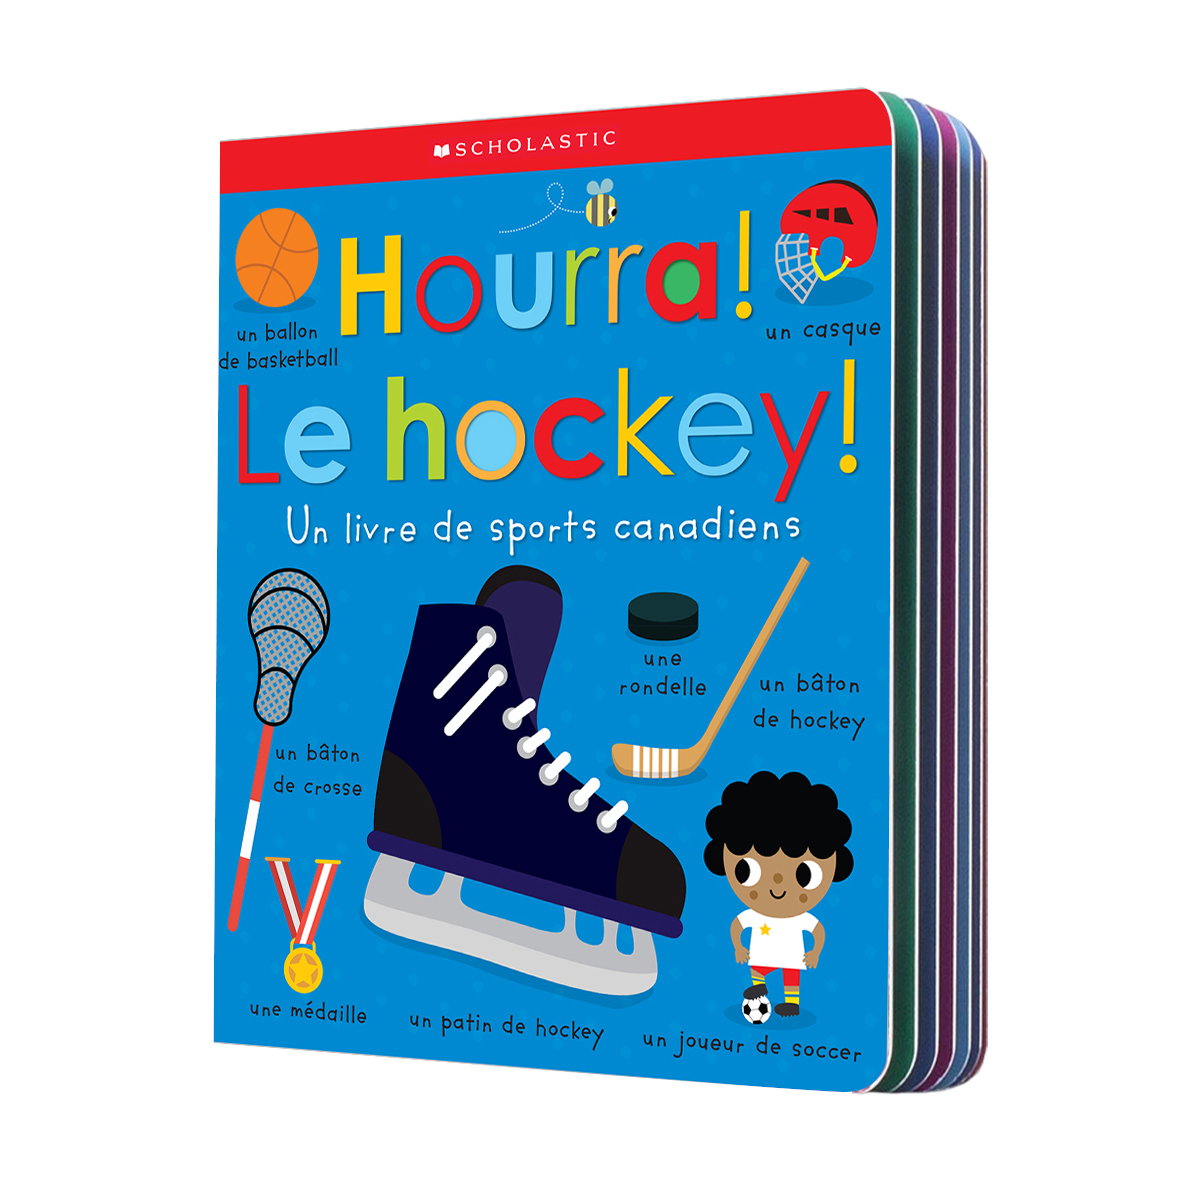  Hourra! Le hockey! Un livre de sports canadiens 